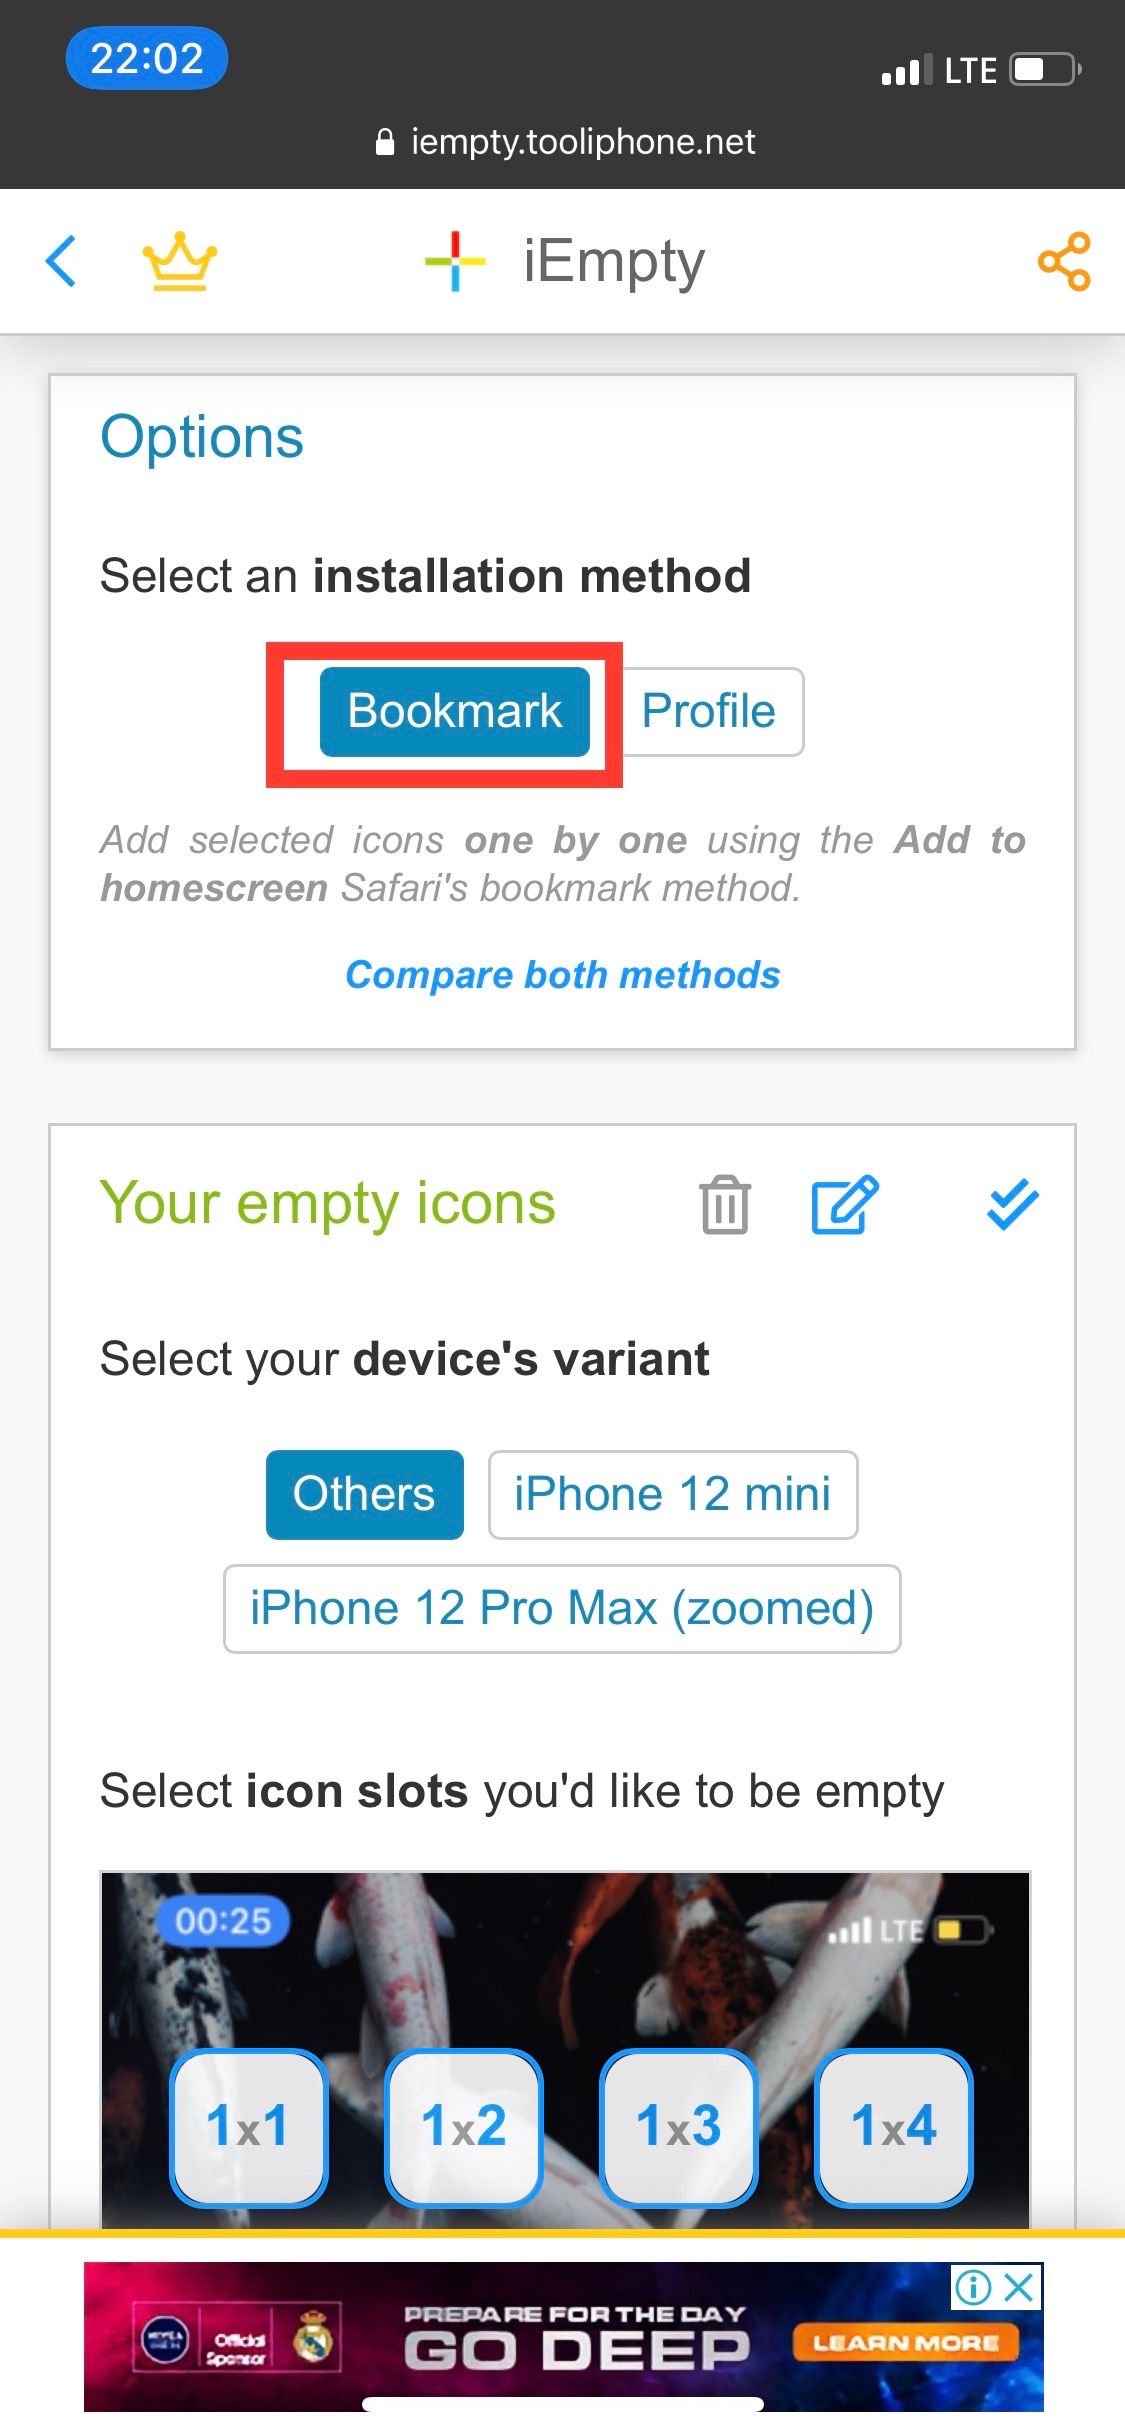 iEmpty Bookmark feature